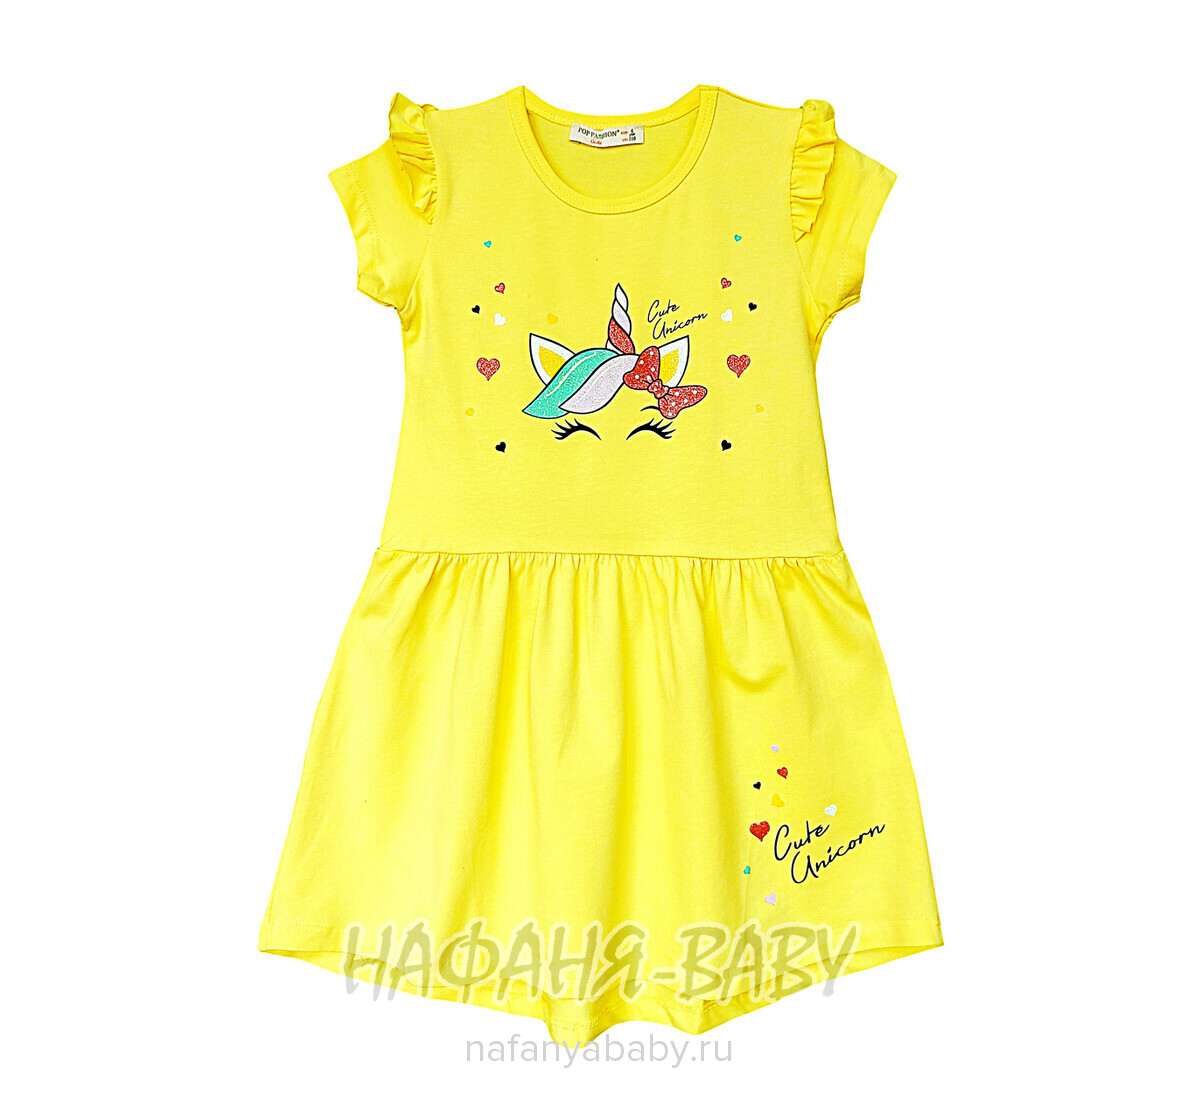 Платье трикотажное PF арт: 6836, 1-4 года, 5-9 лет, цвет желтый, оптом Турция